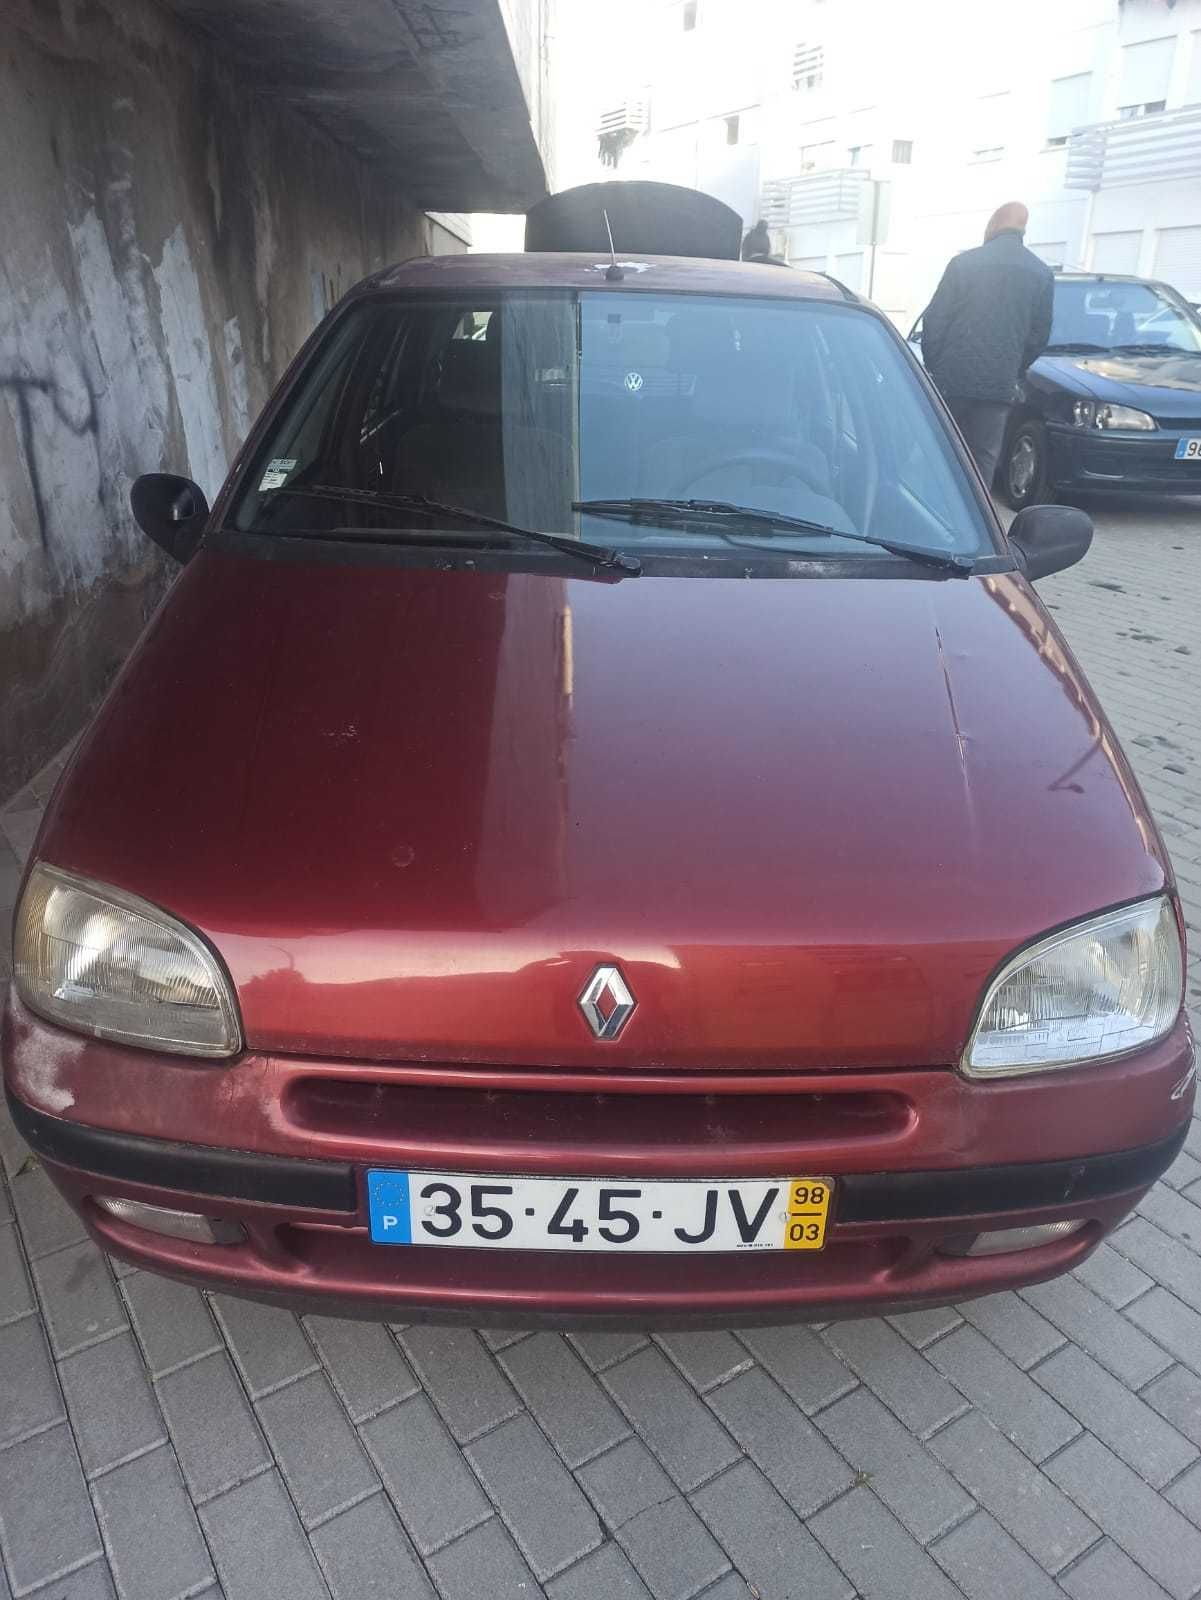 Renault Clio II 1998